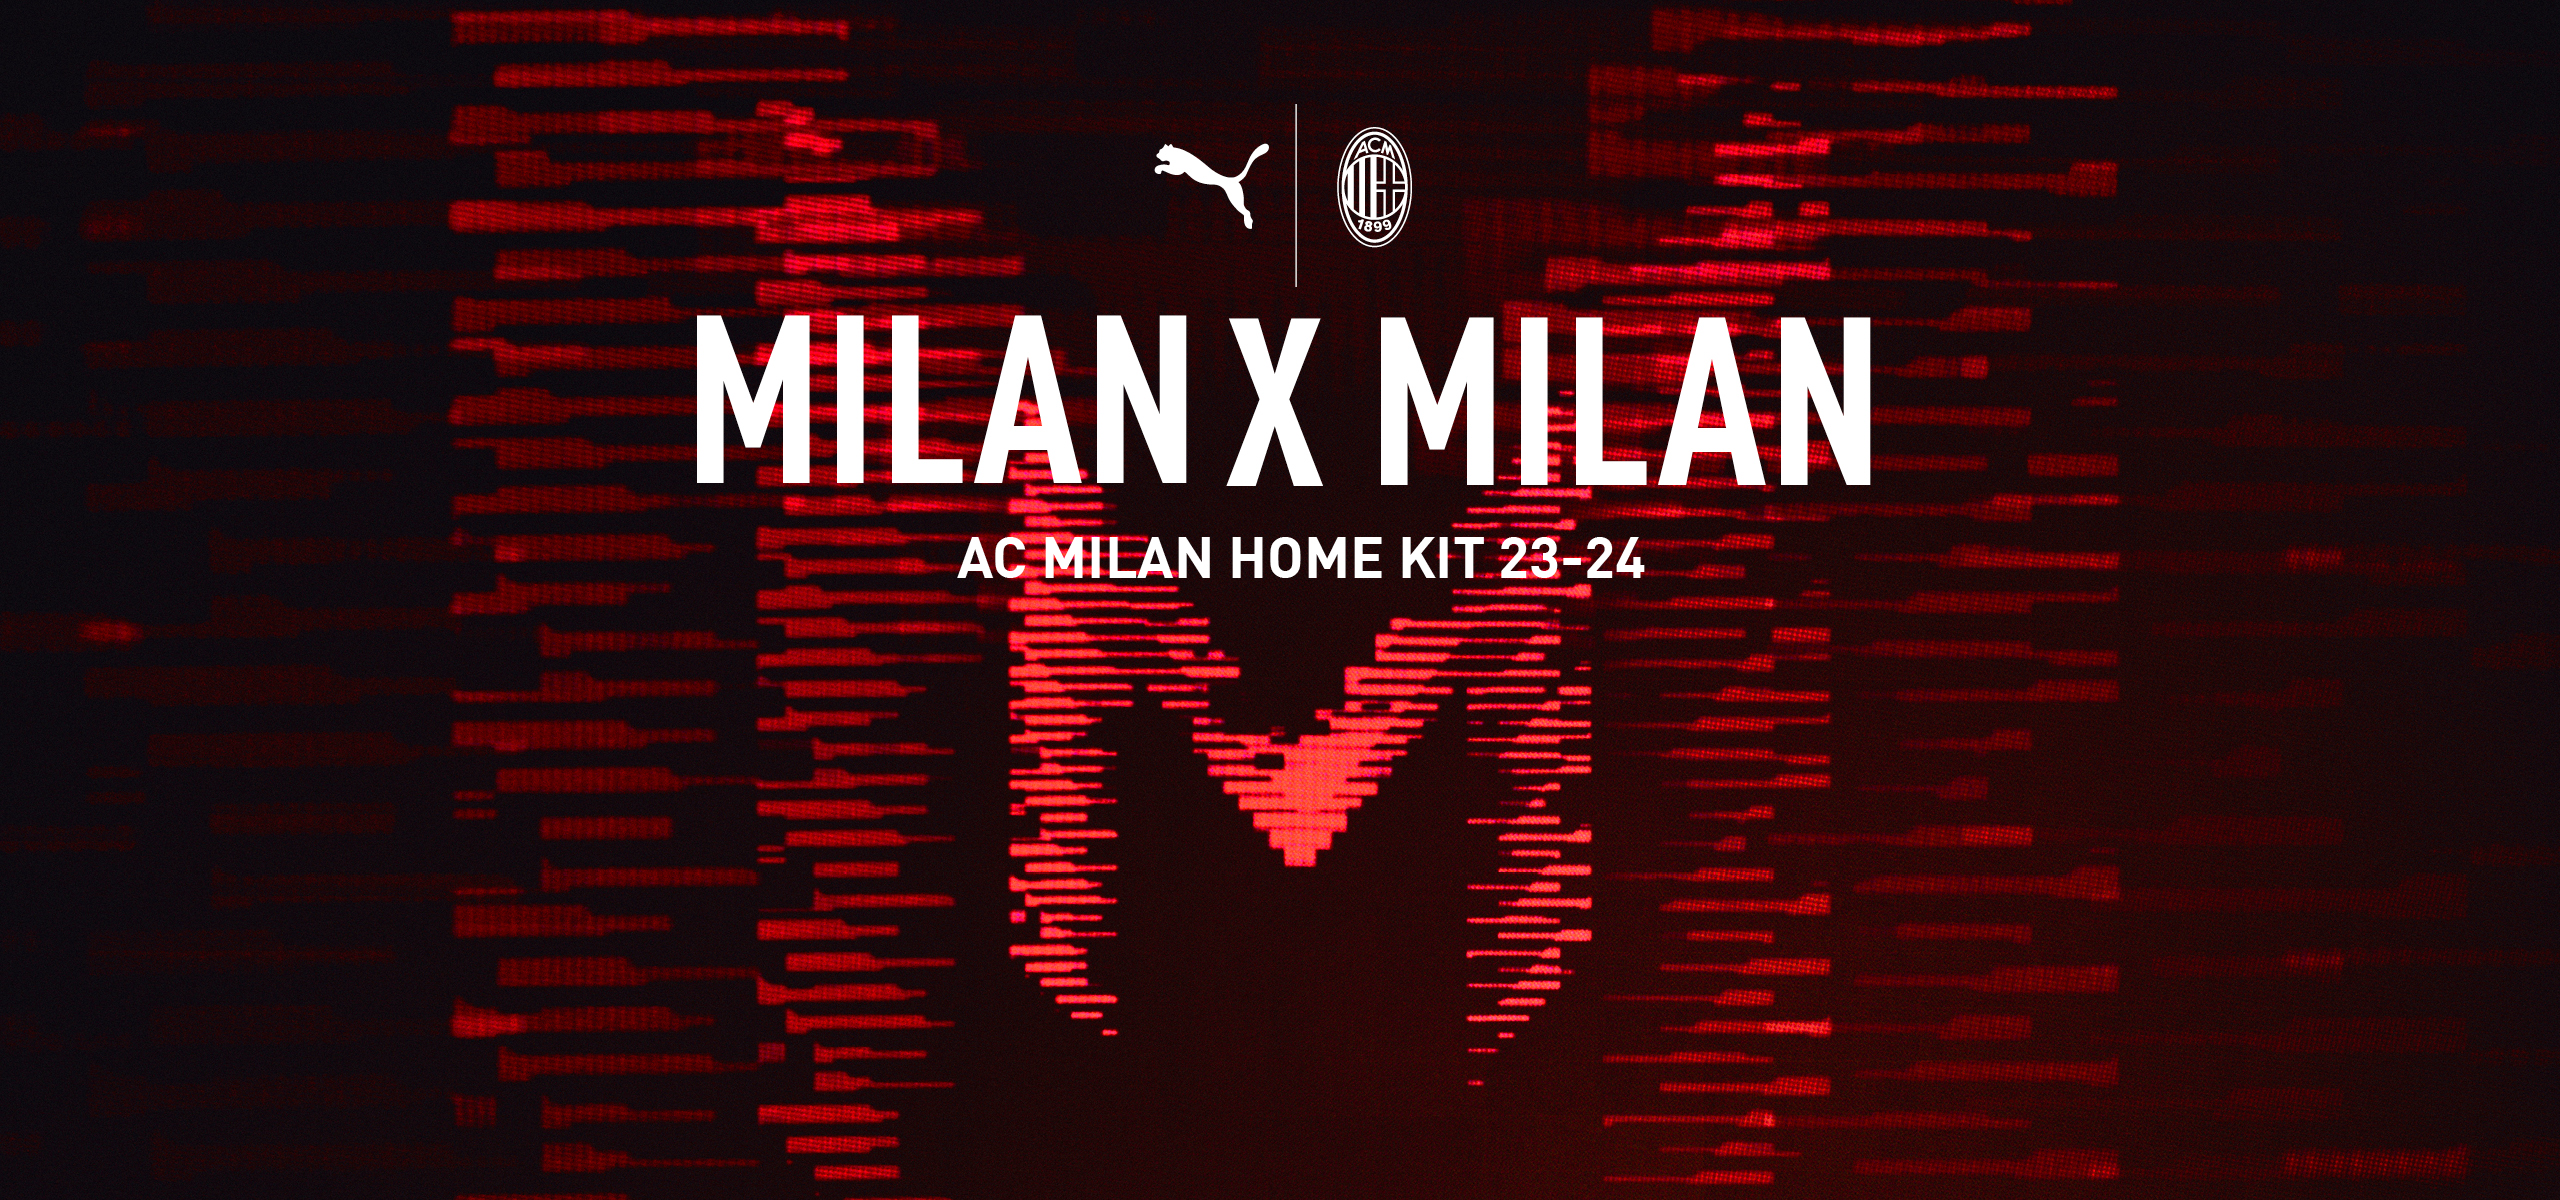 Revolutionary? Milan 23-24 Home Kit Released - Numbers Poorly Visible on TV  - Footy Headlines